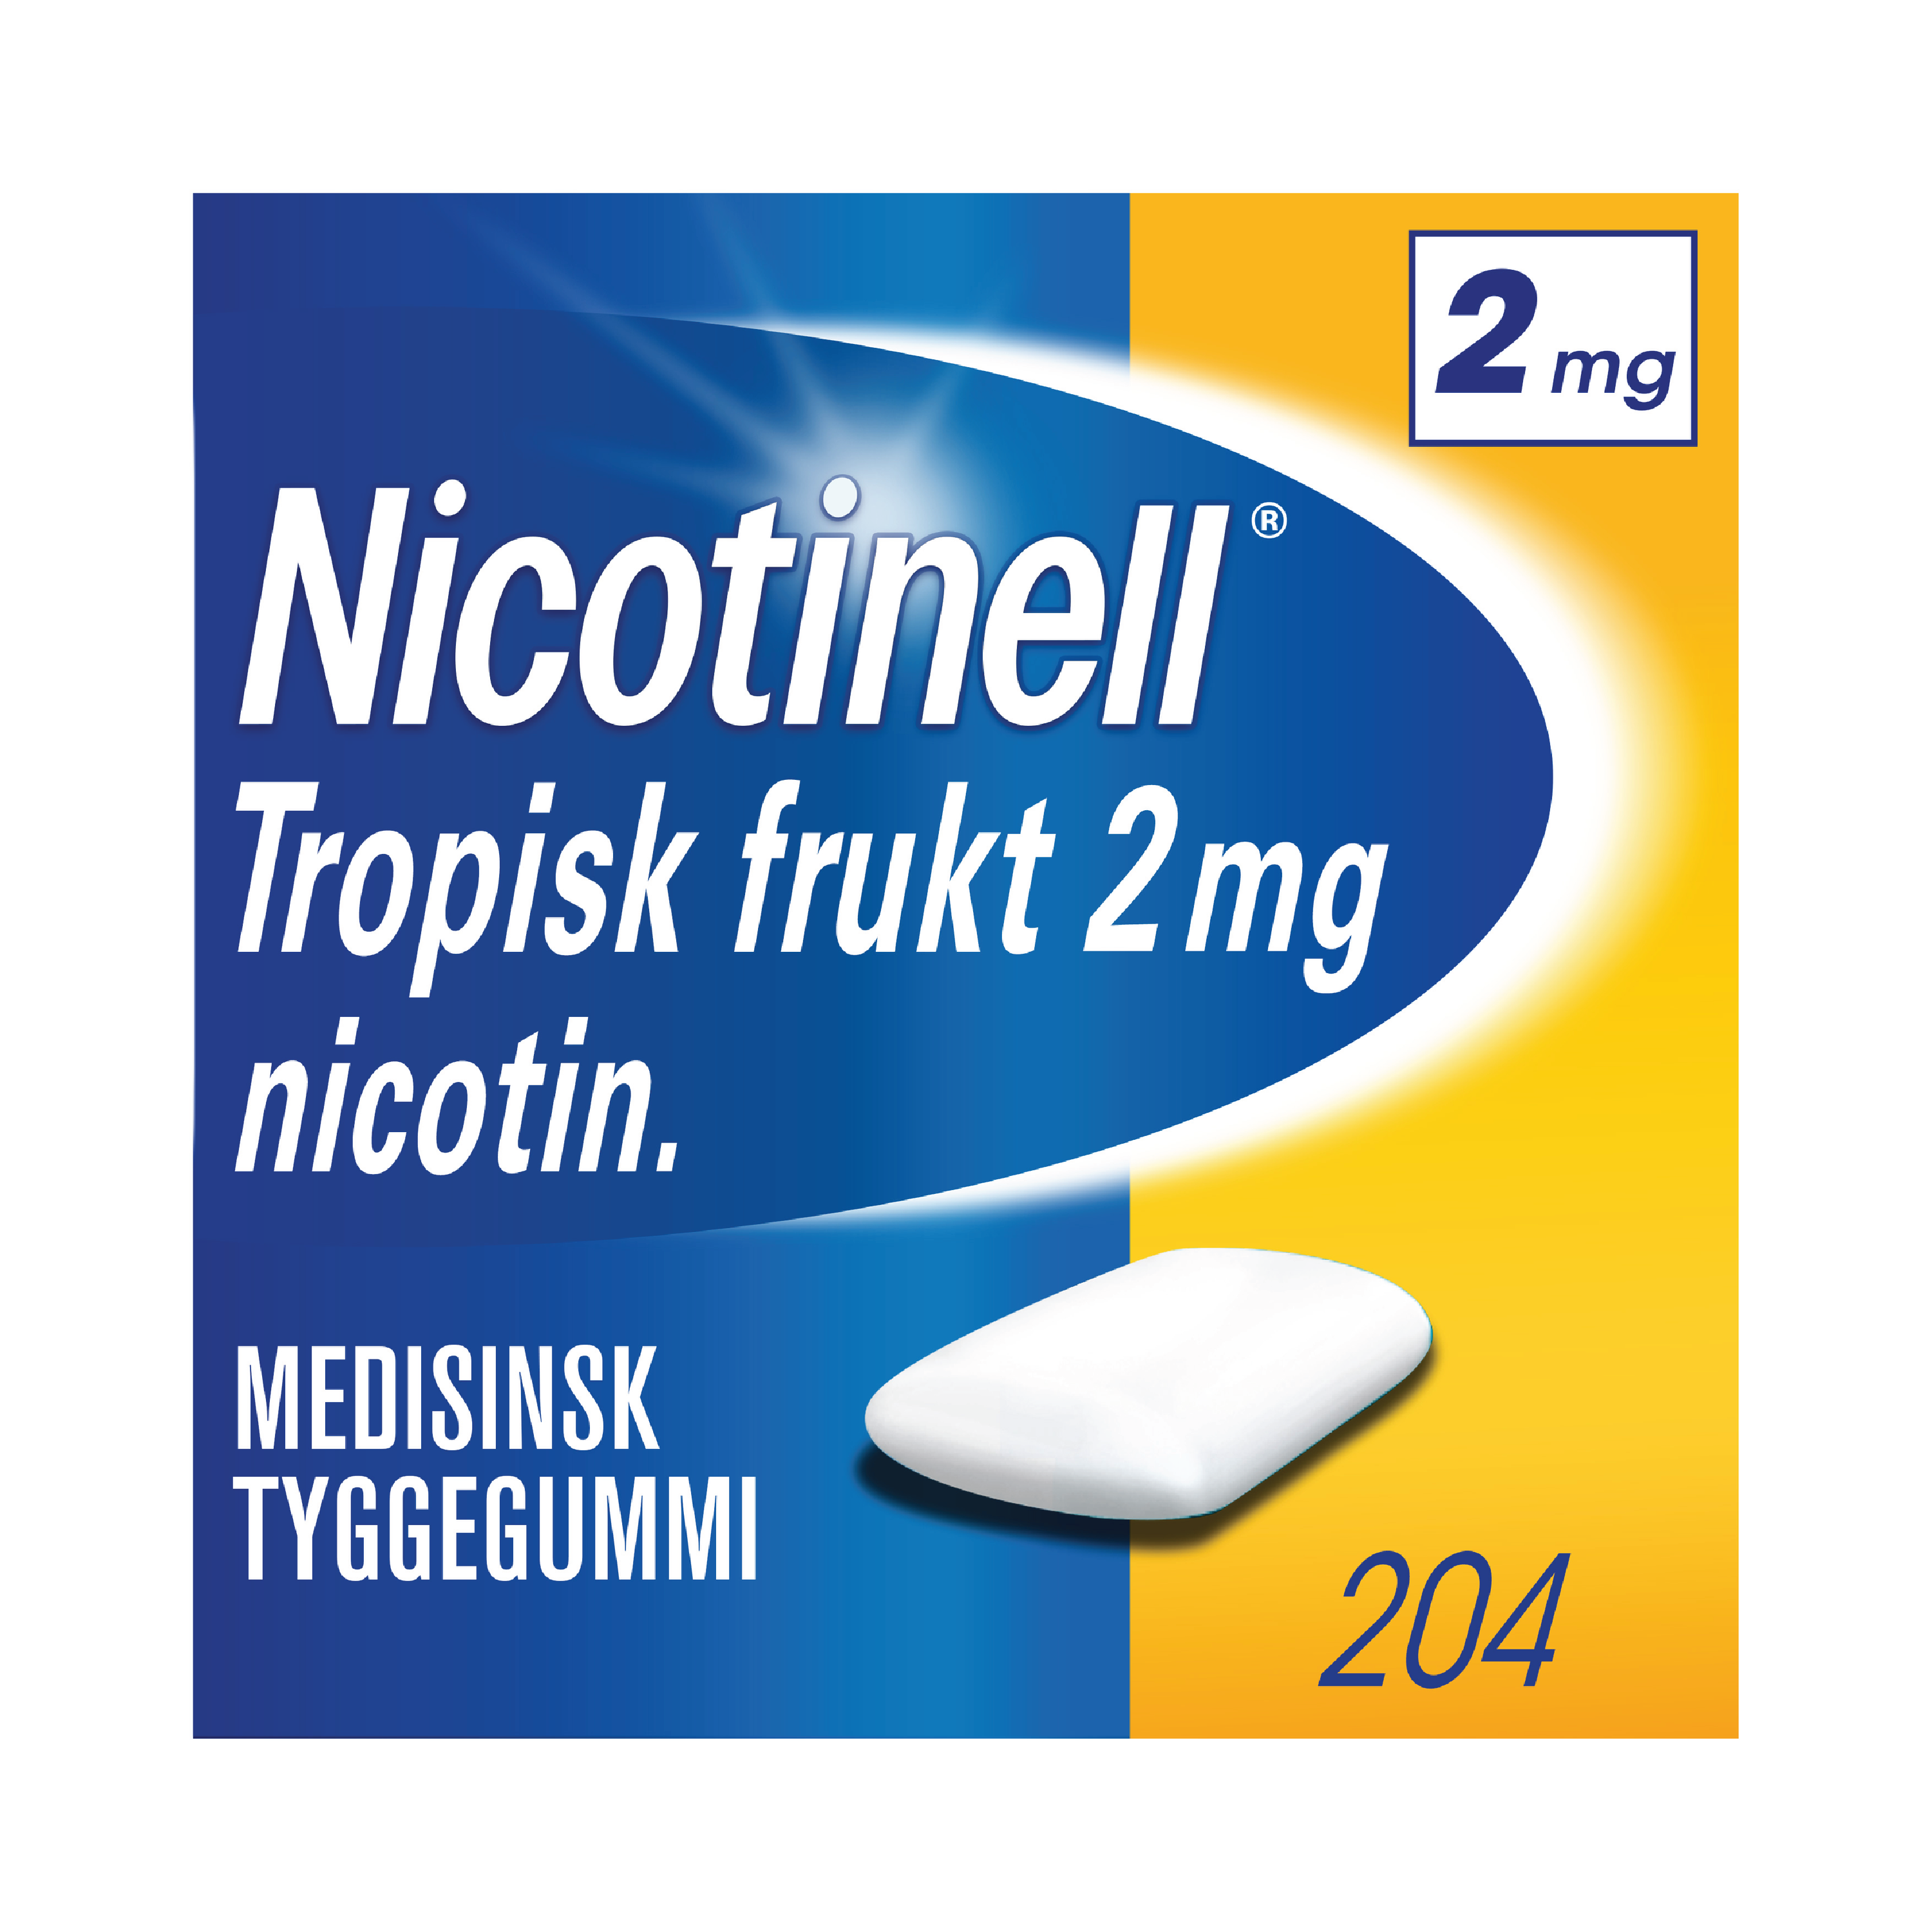 Nicotinell Tyggegummi 2mg tropsik frukt, 204 stk.